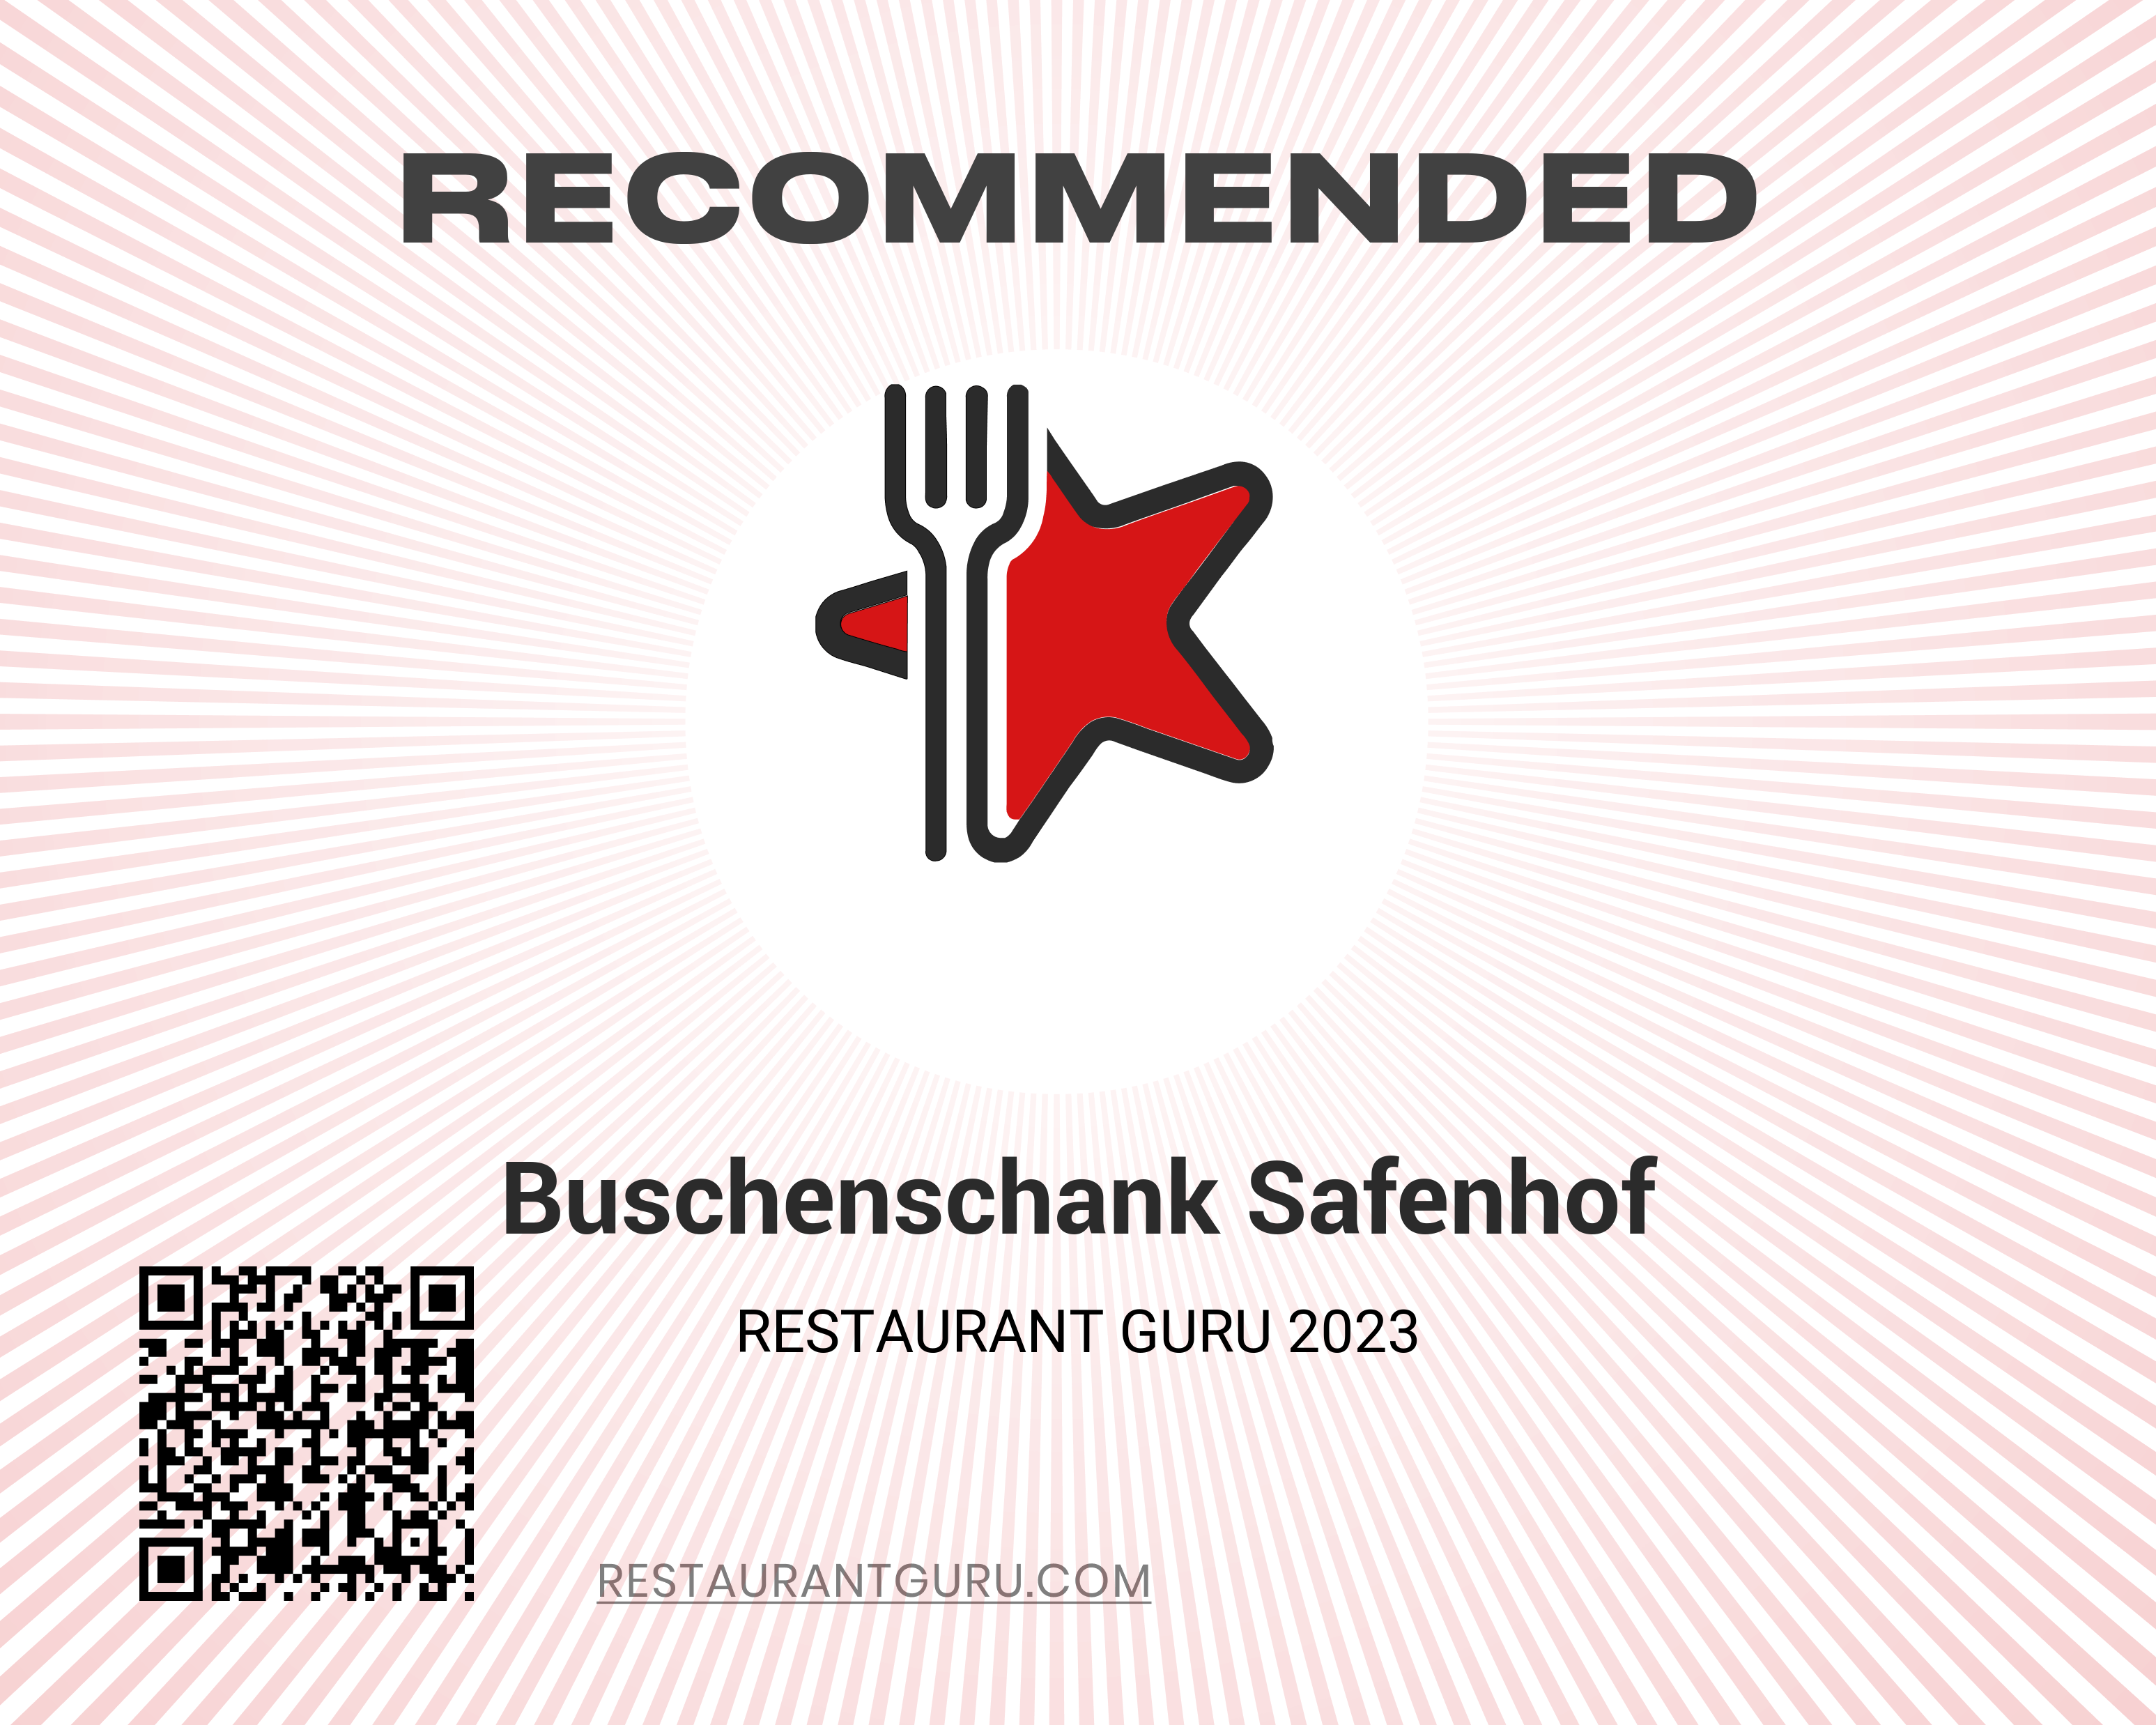 RestaurantGuru_Certificate